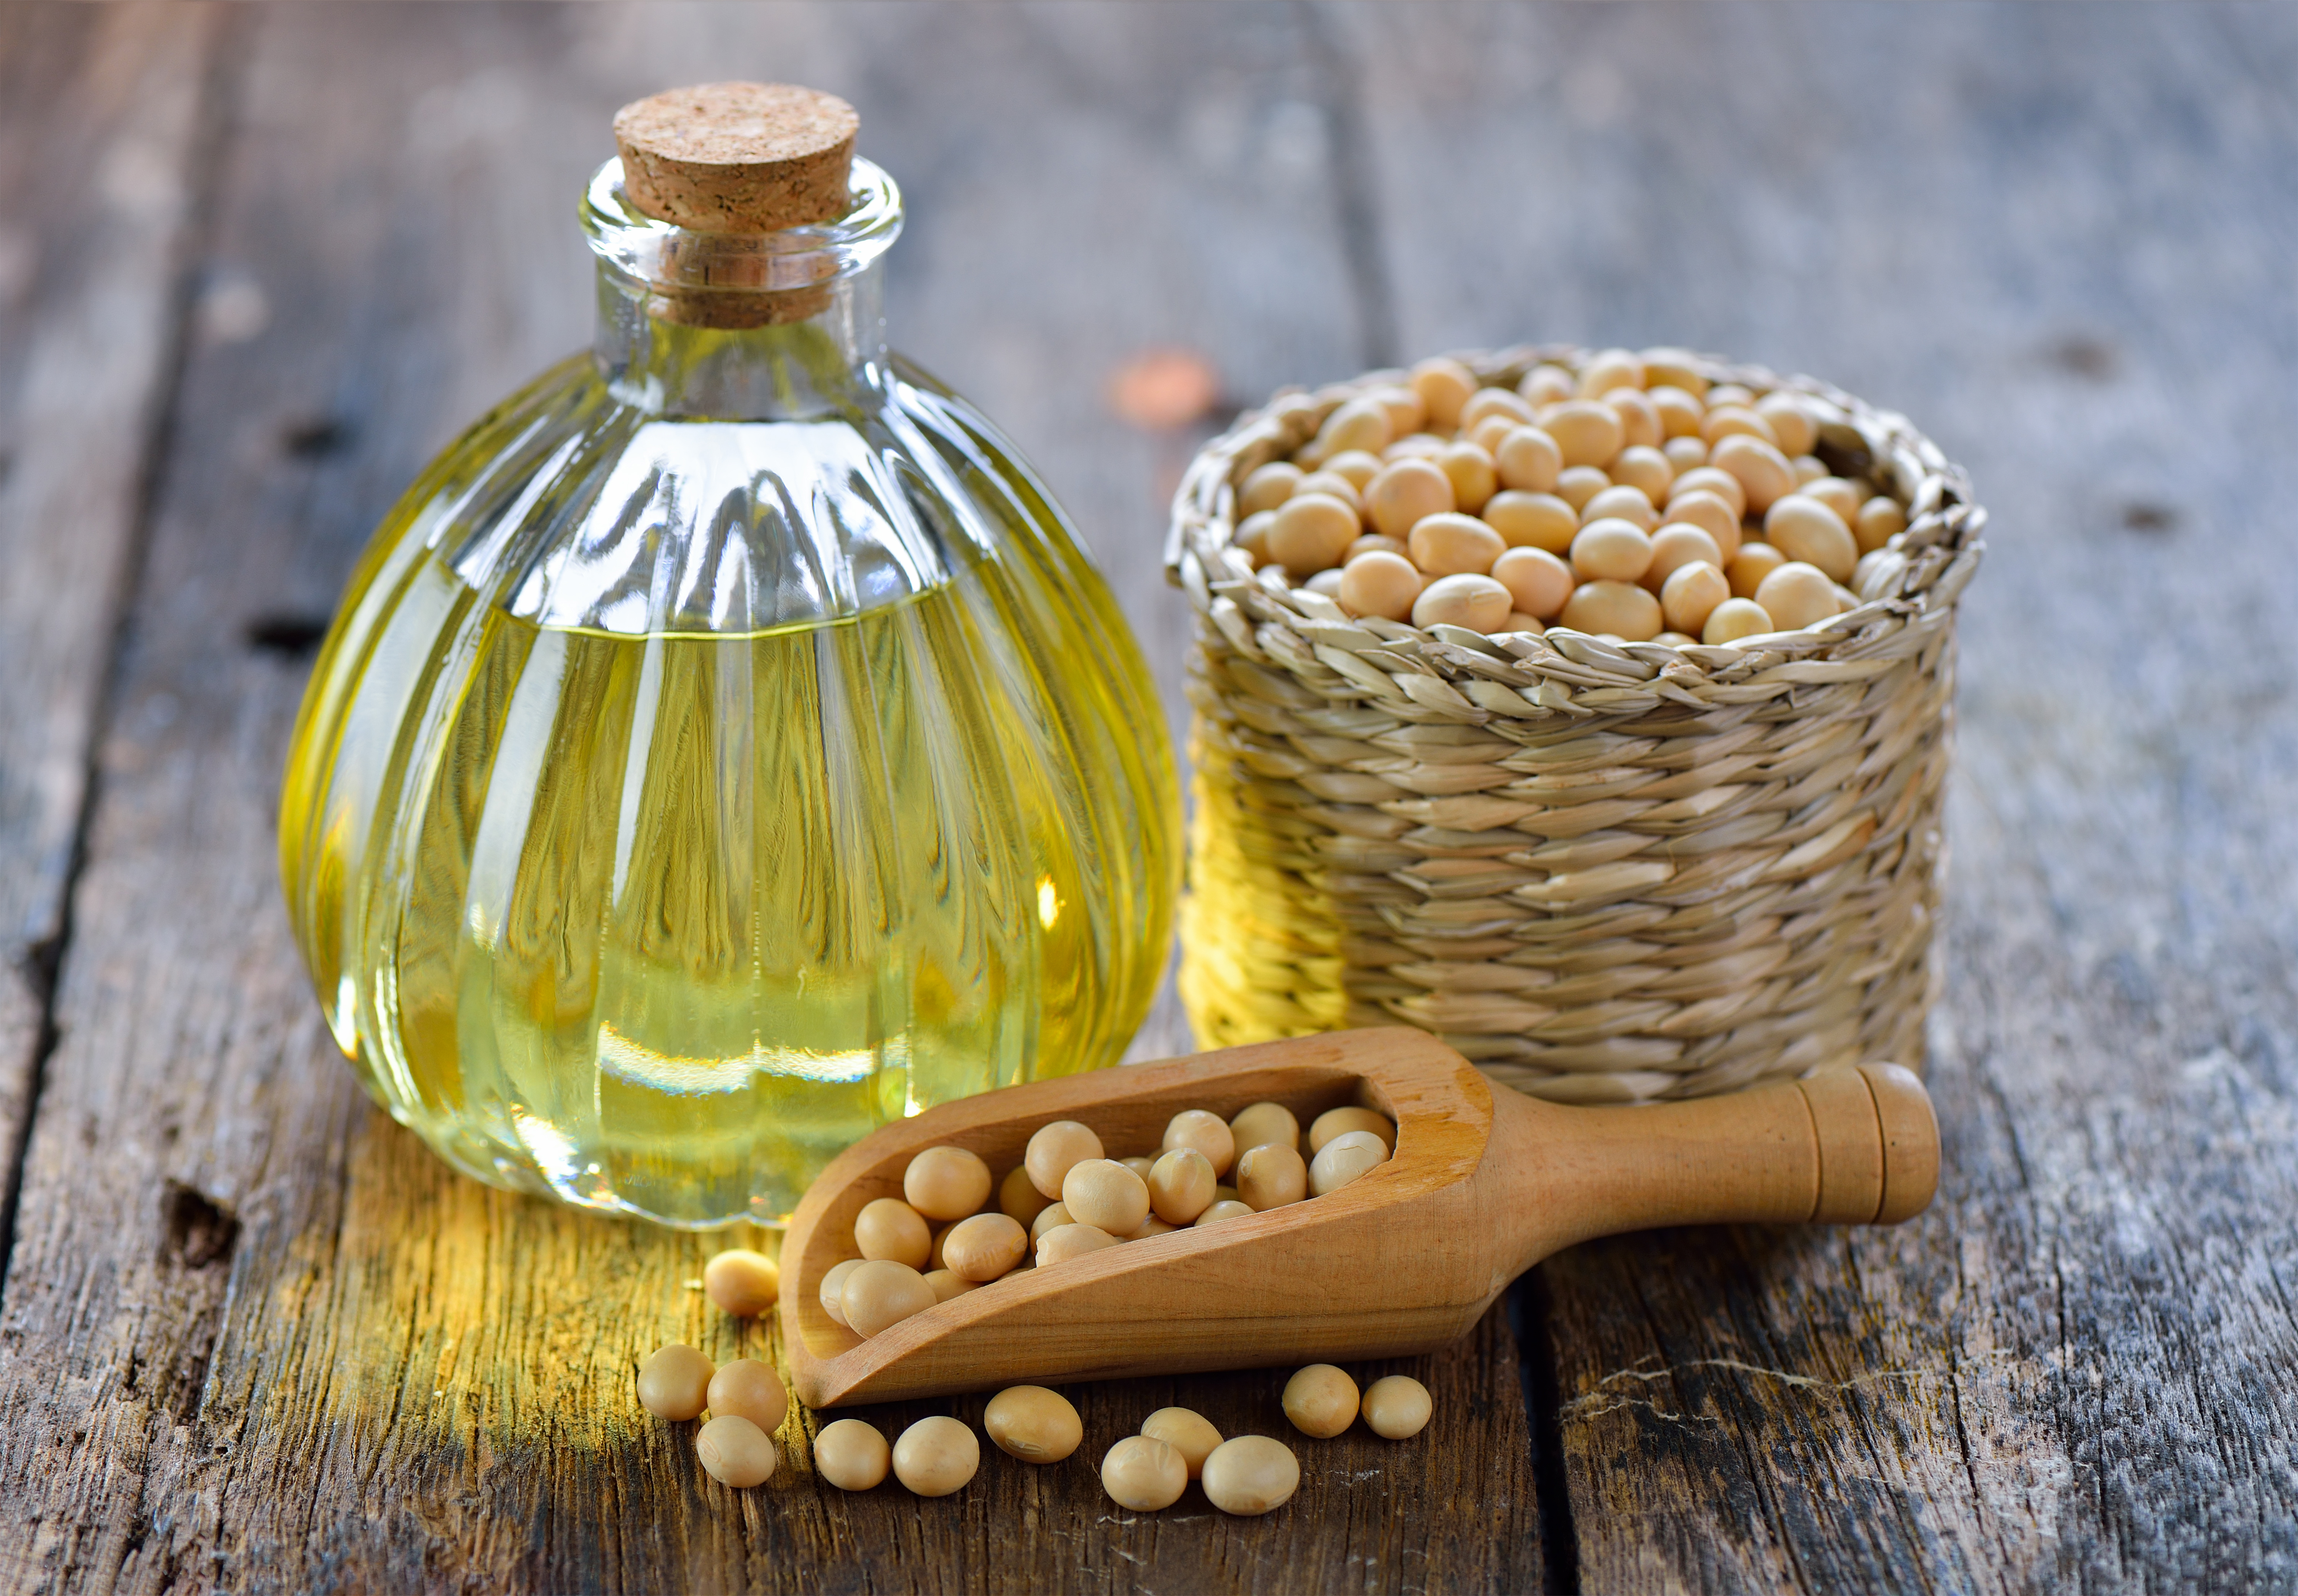 Is Soybean Oil Healthy?